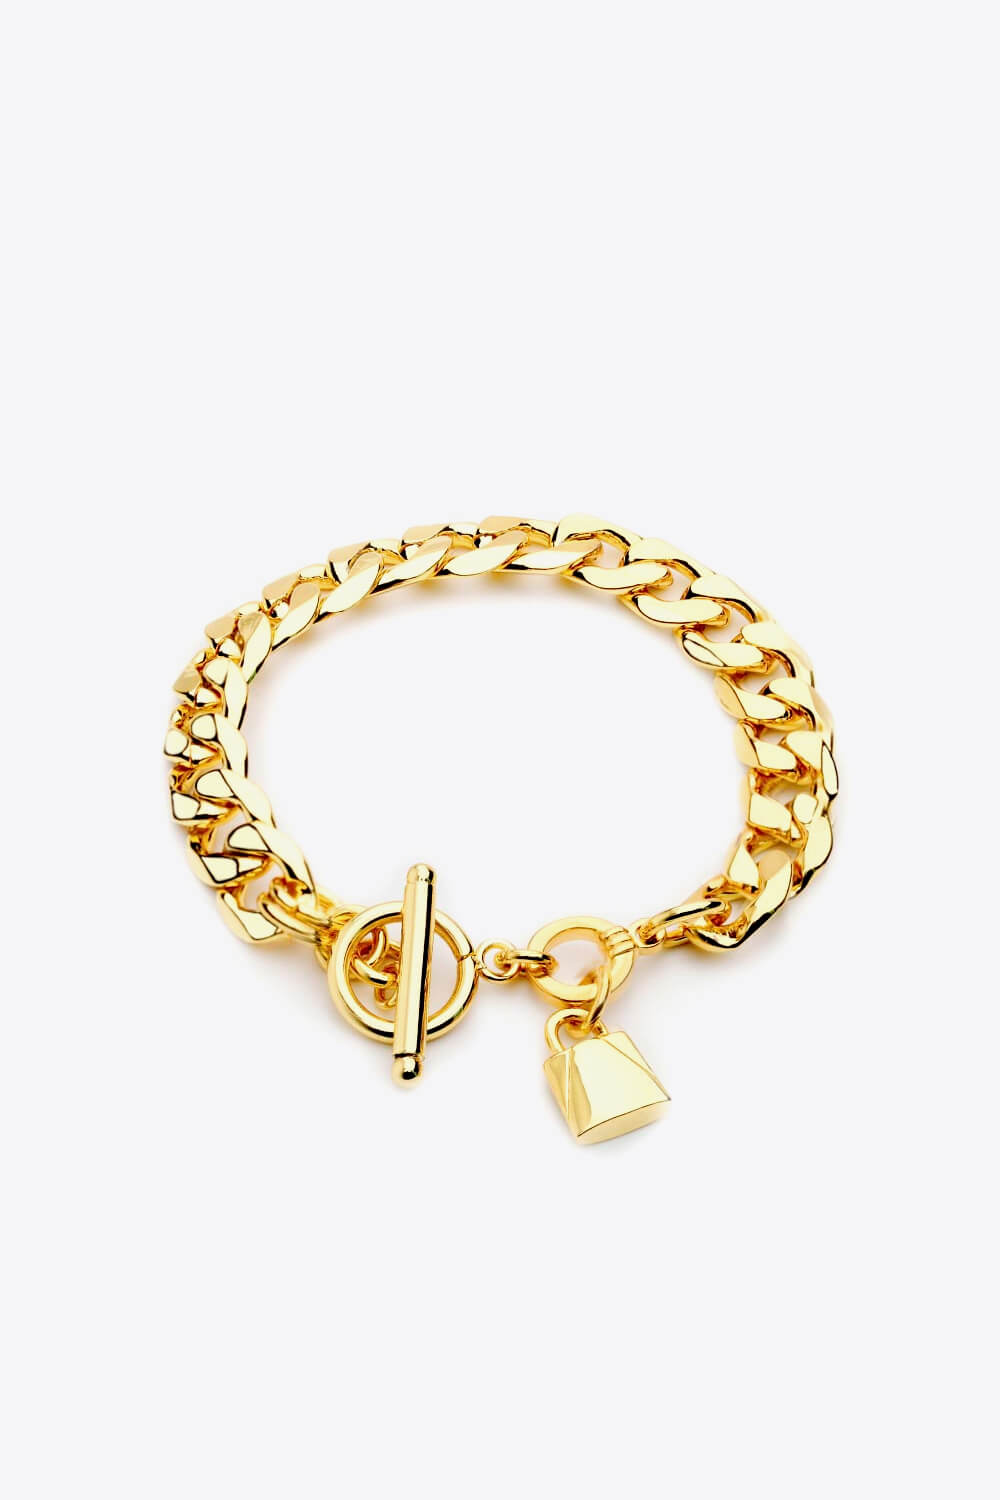 Lock Charm Toggle Clasp Bracelet - Gold / One Size - Women’s Jewelry - Bracelets - 2 - 2024